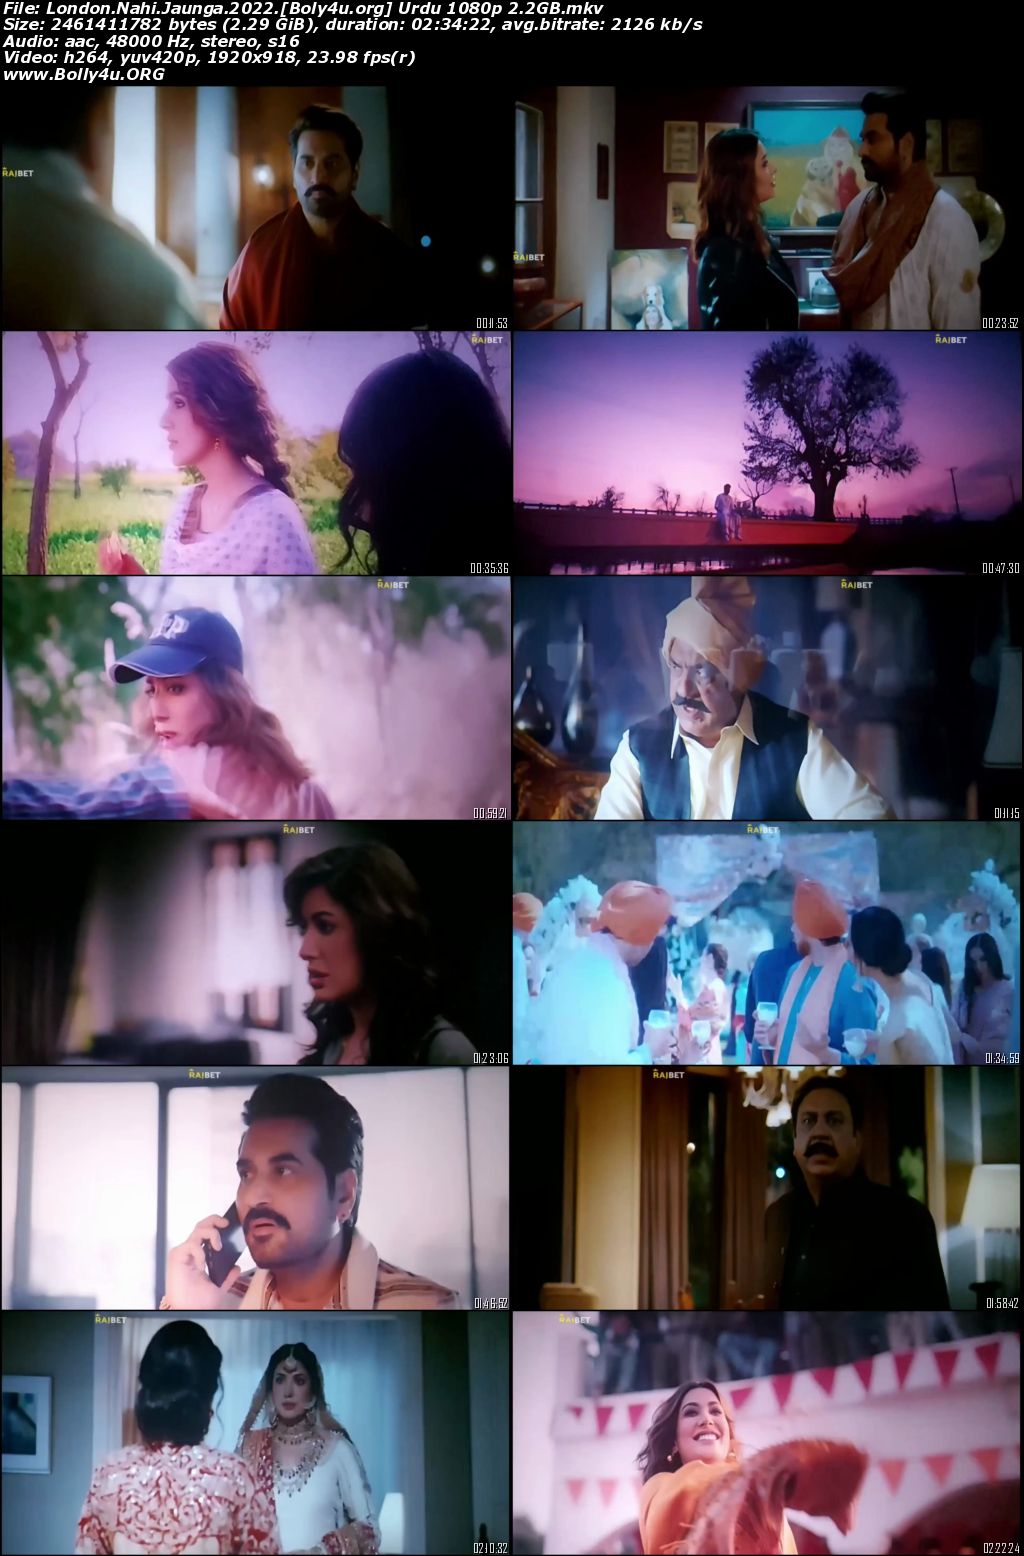 London Nahi Jaunga 2022 Pre DVDRip Urdu Full Movie Download